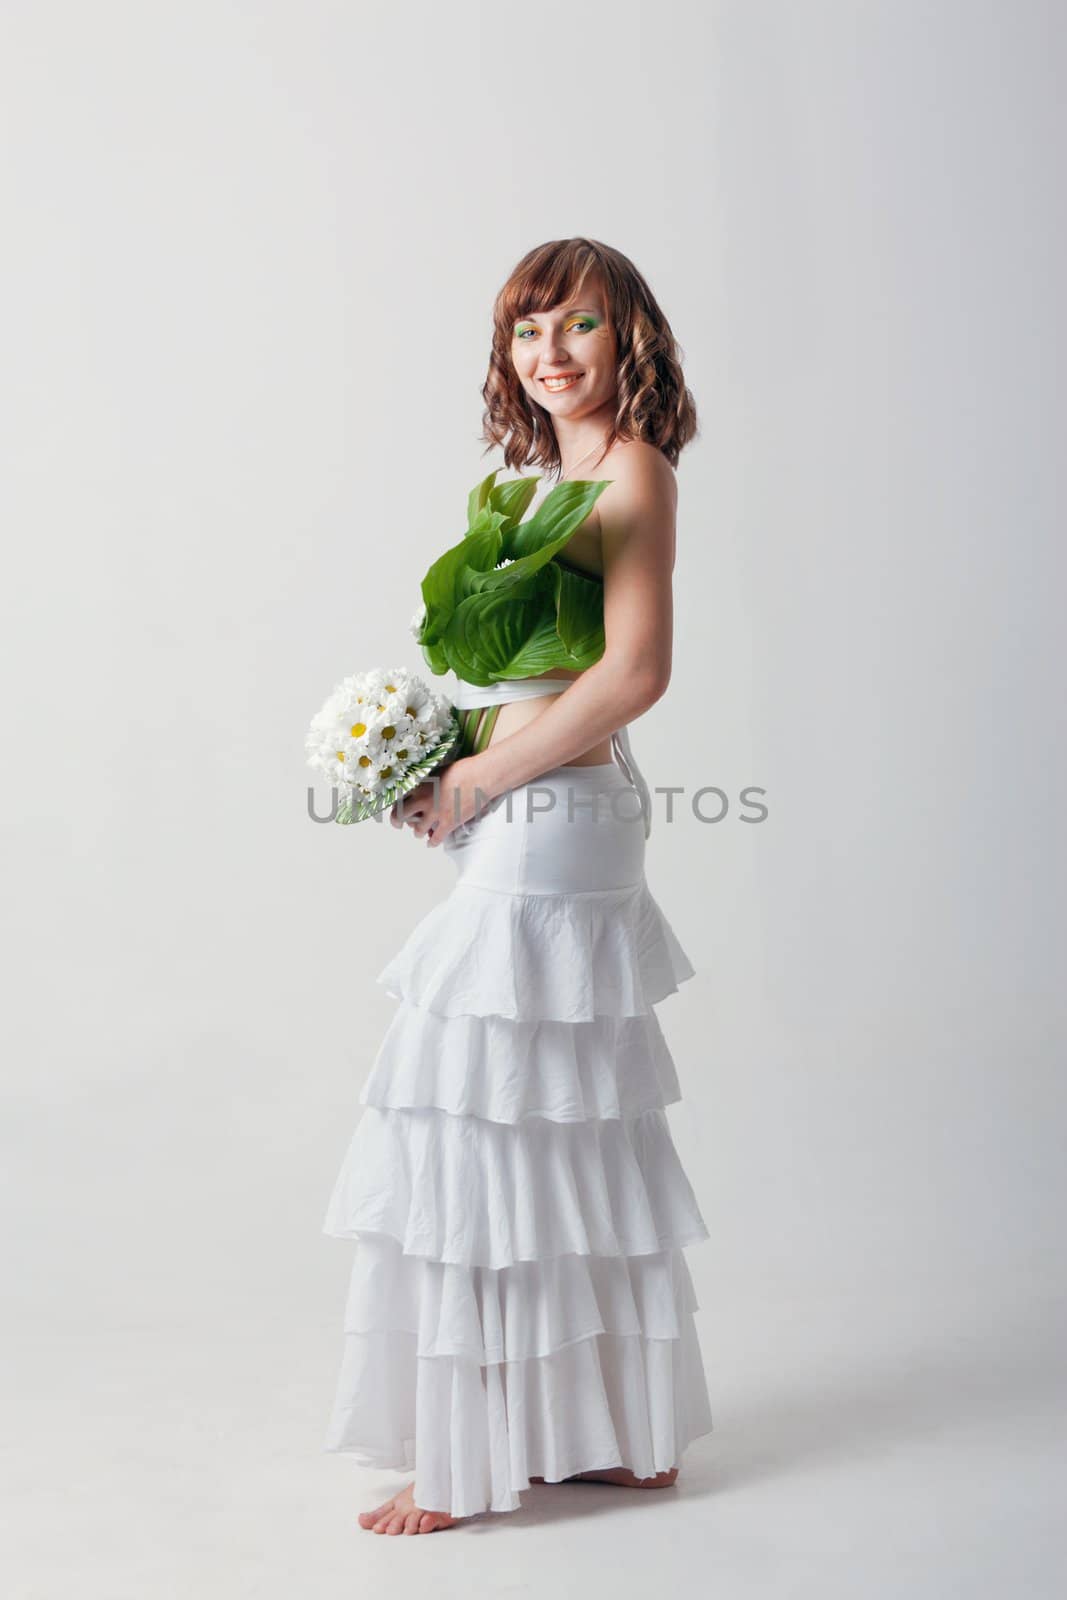 happy woman with wedding bouquet by nigerfoxy